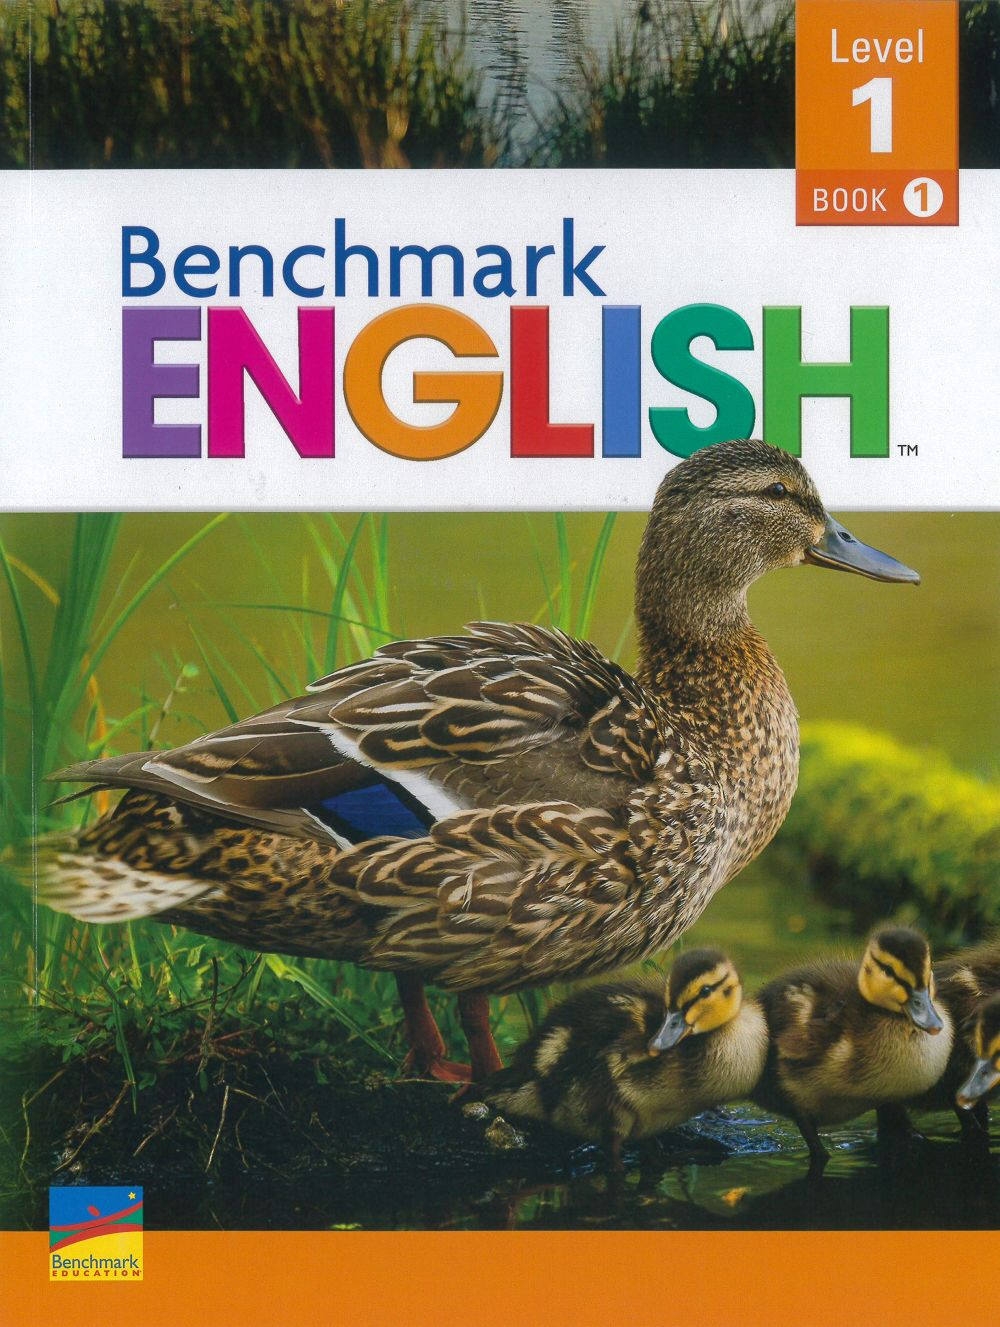 Benchmark English (1) Module 1 Student Book